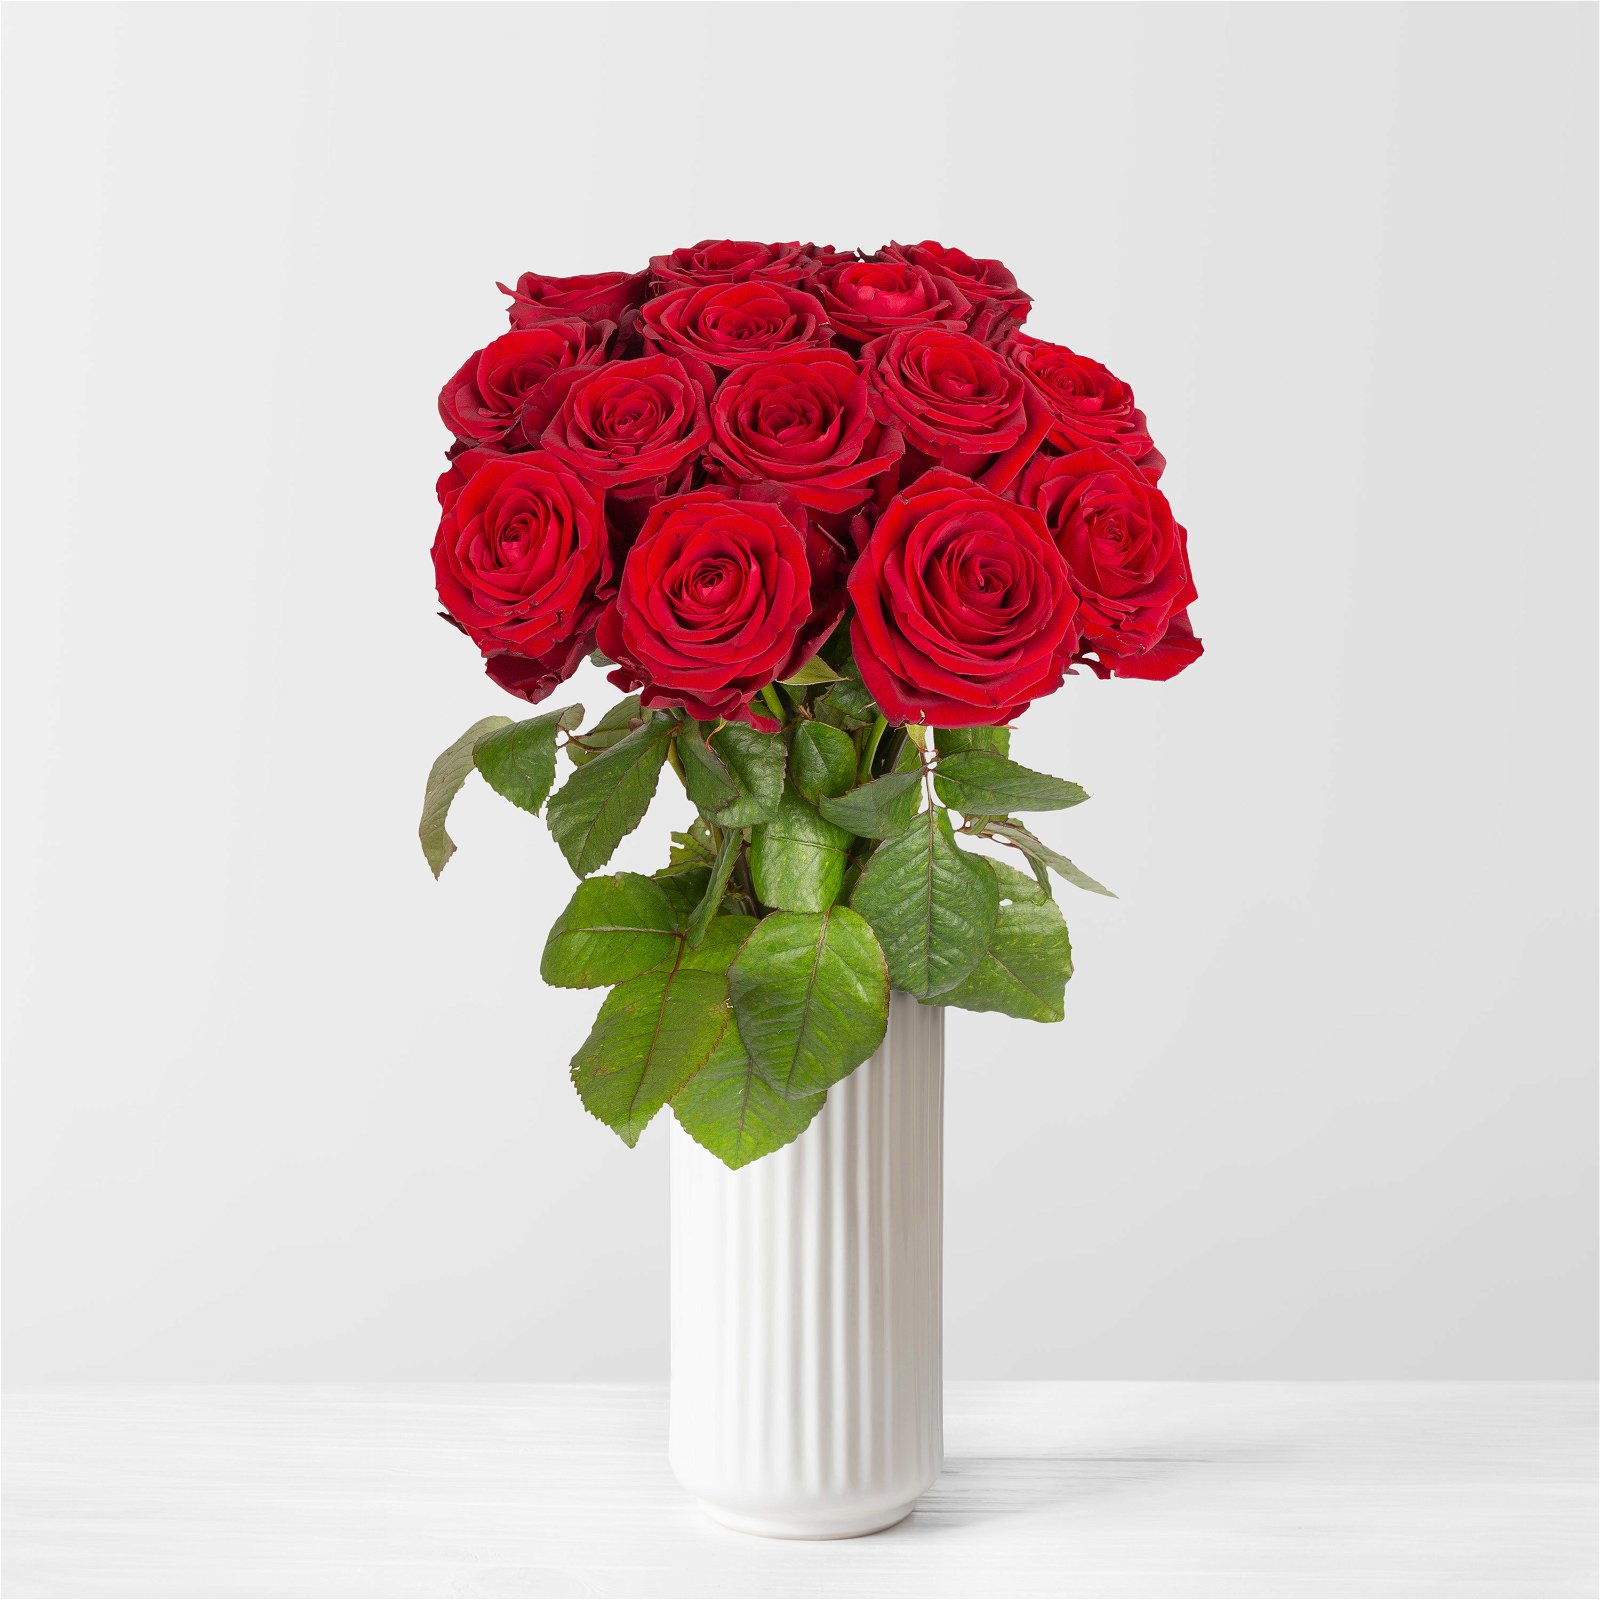 Blumenbund mit Rosen %27Red Naomi%27, 15er-Bund, rot, inkl. gratis Grußkarte